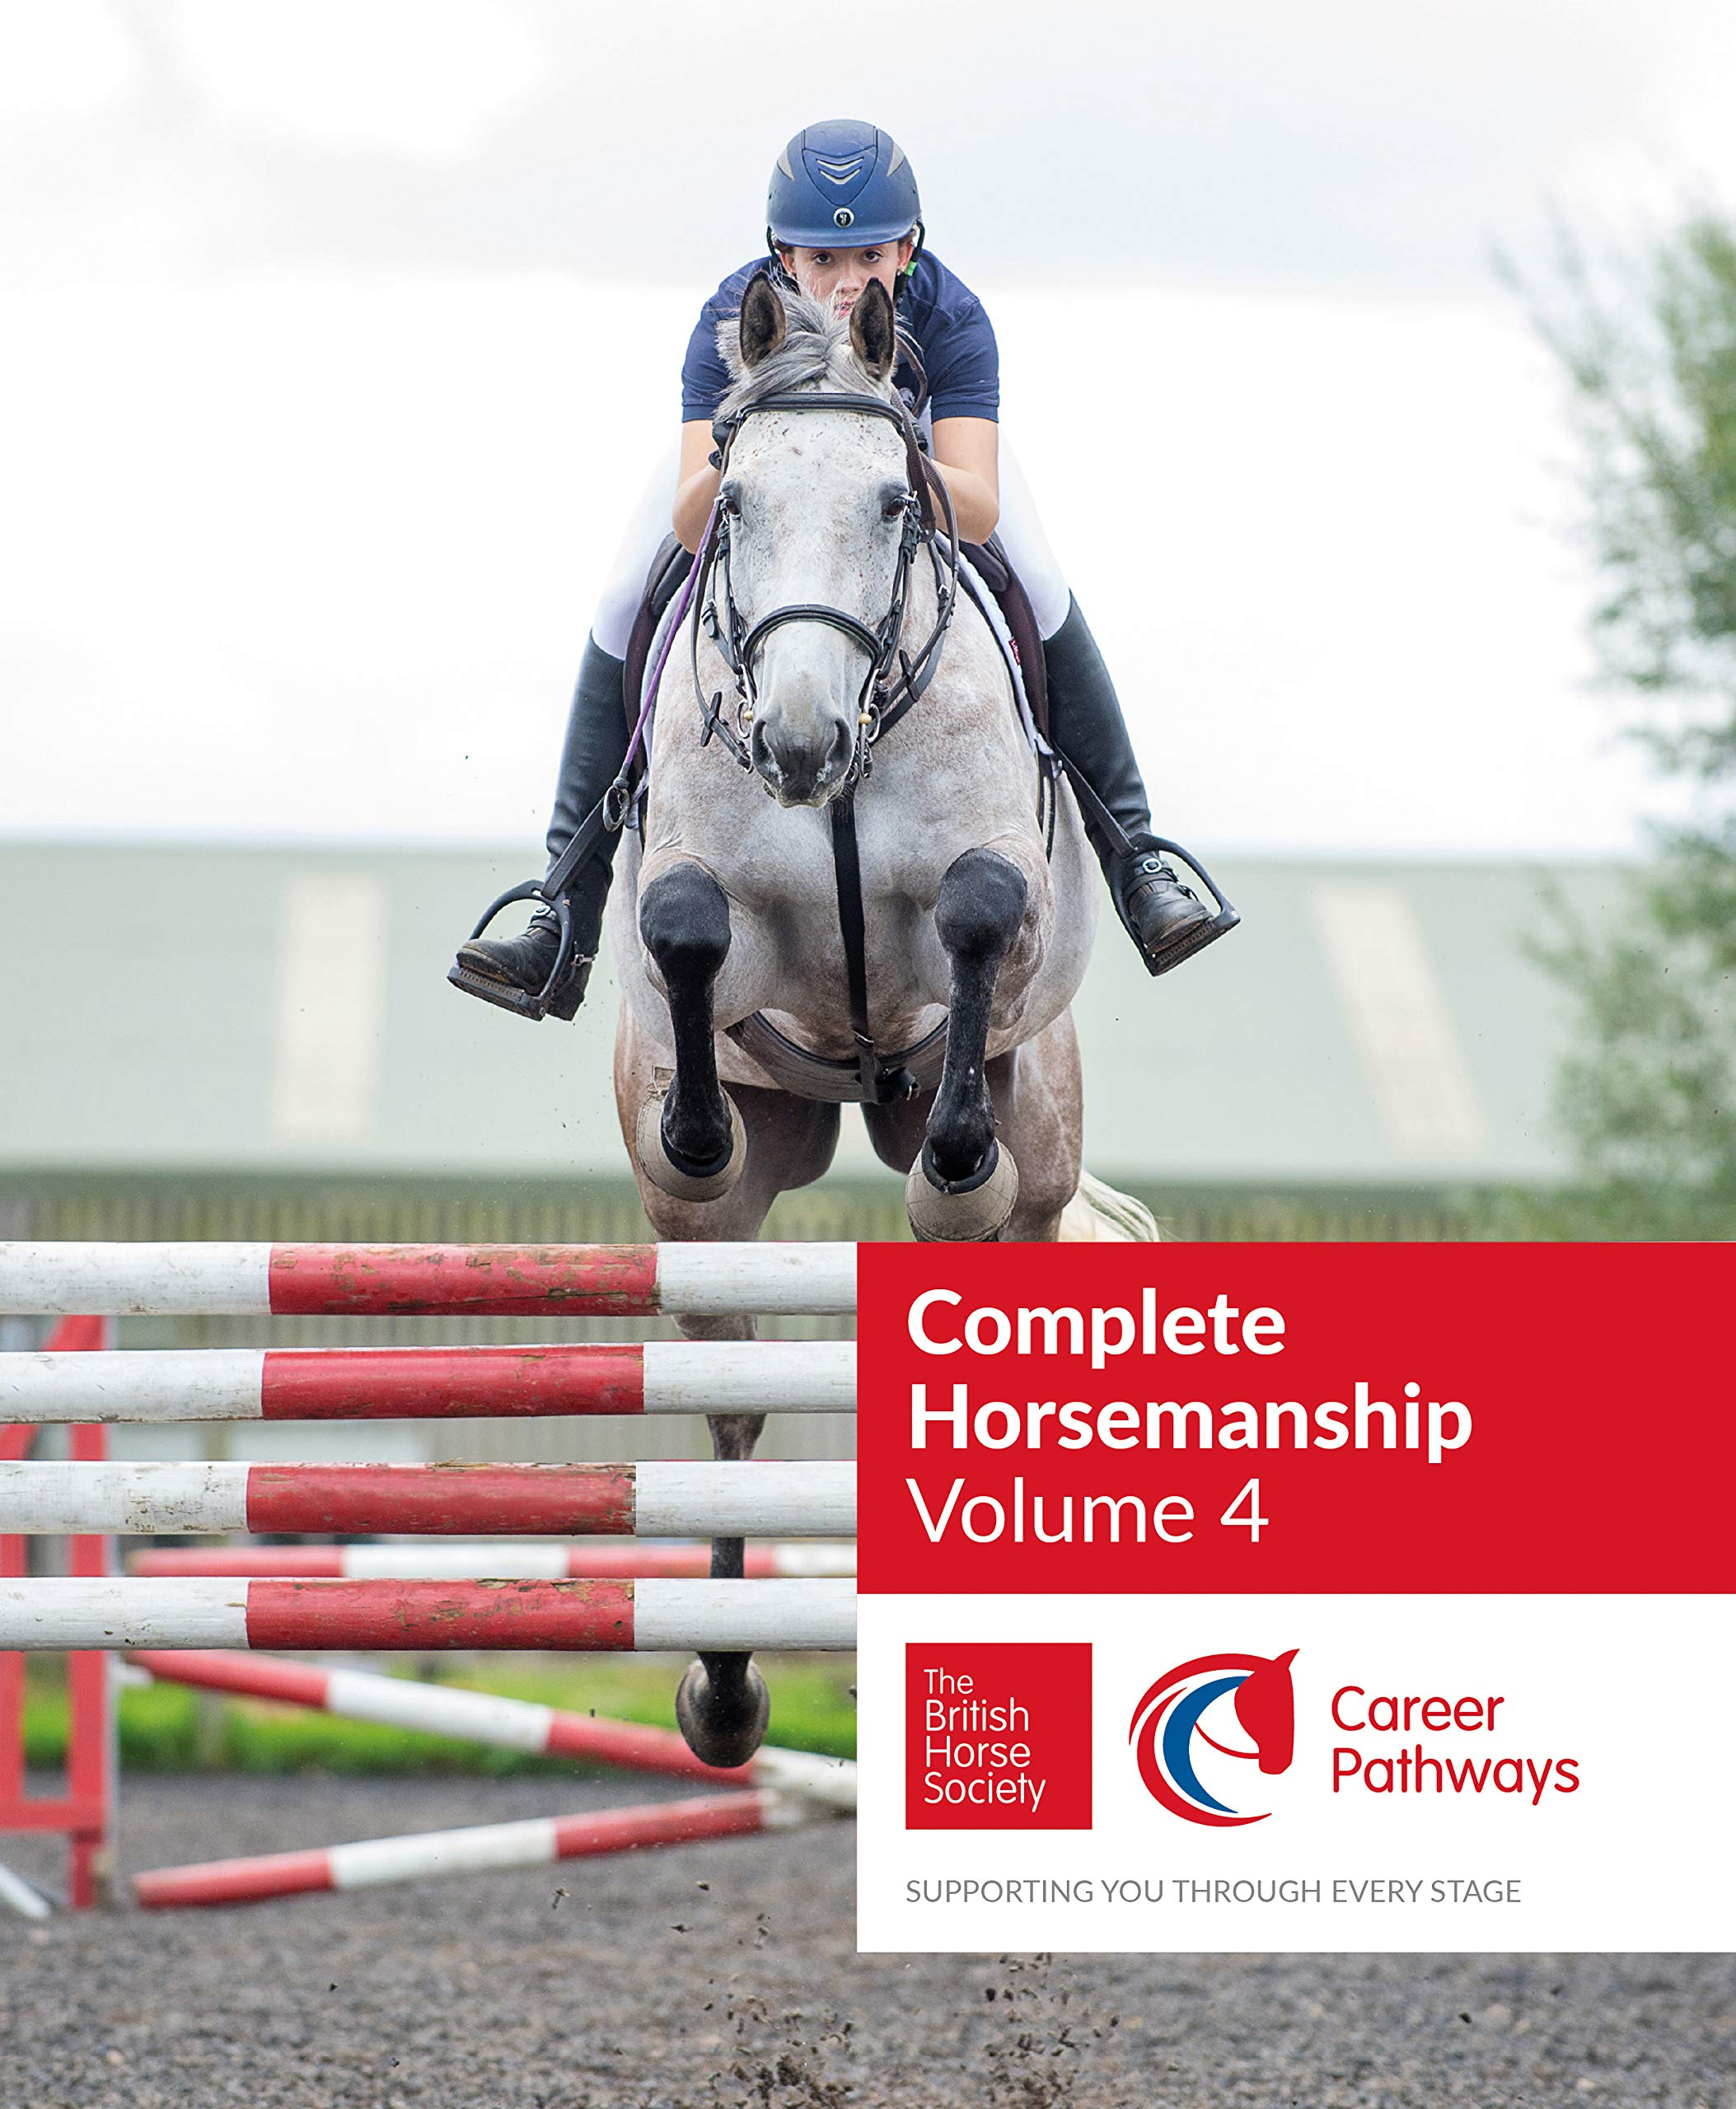 BHS Complete Horsemanship Vol 4